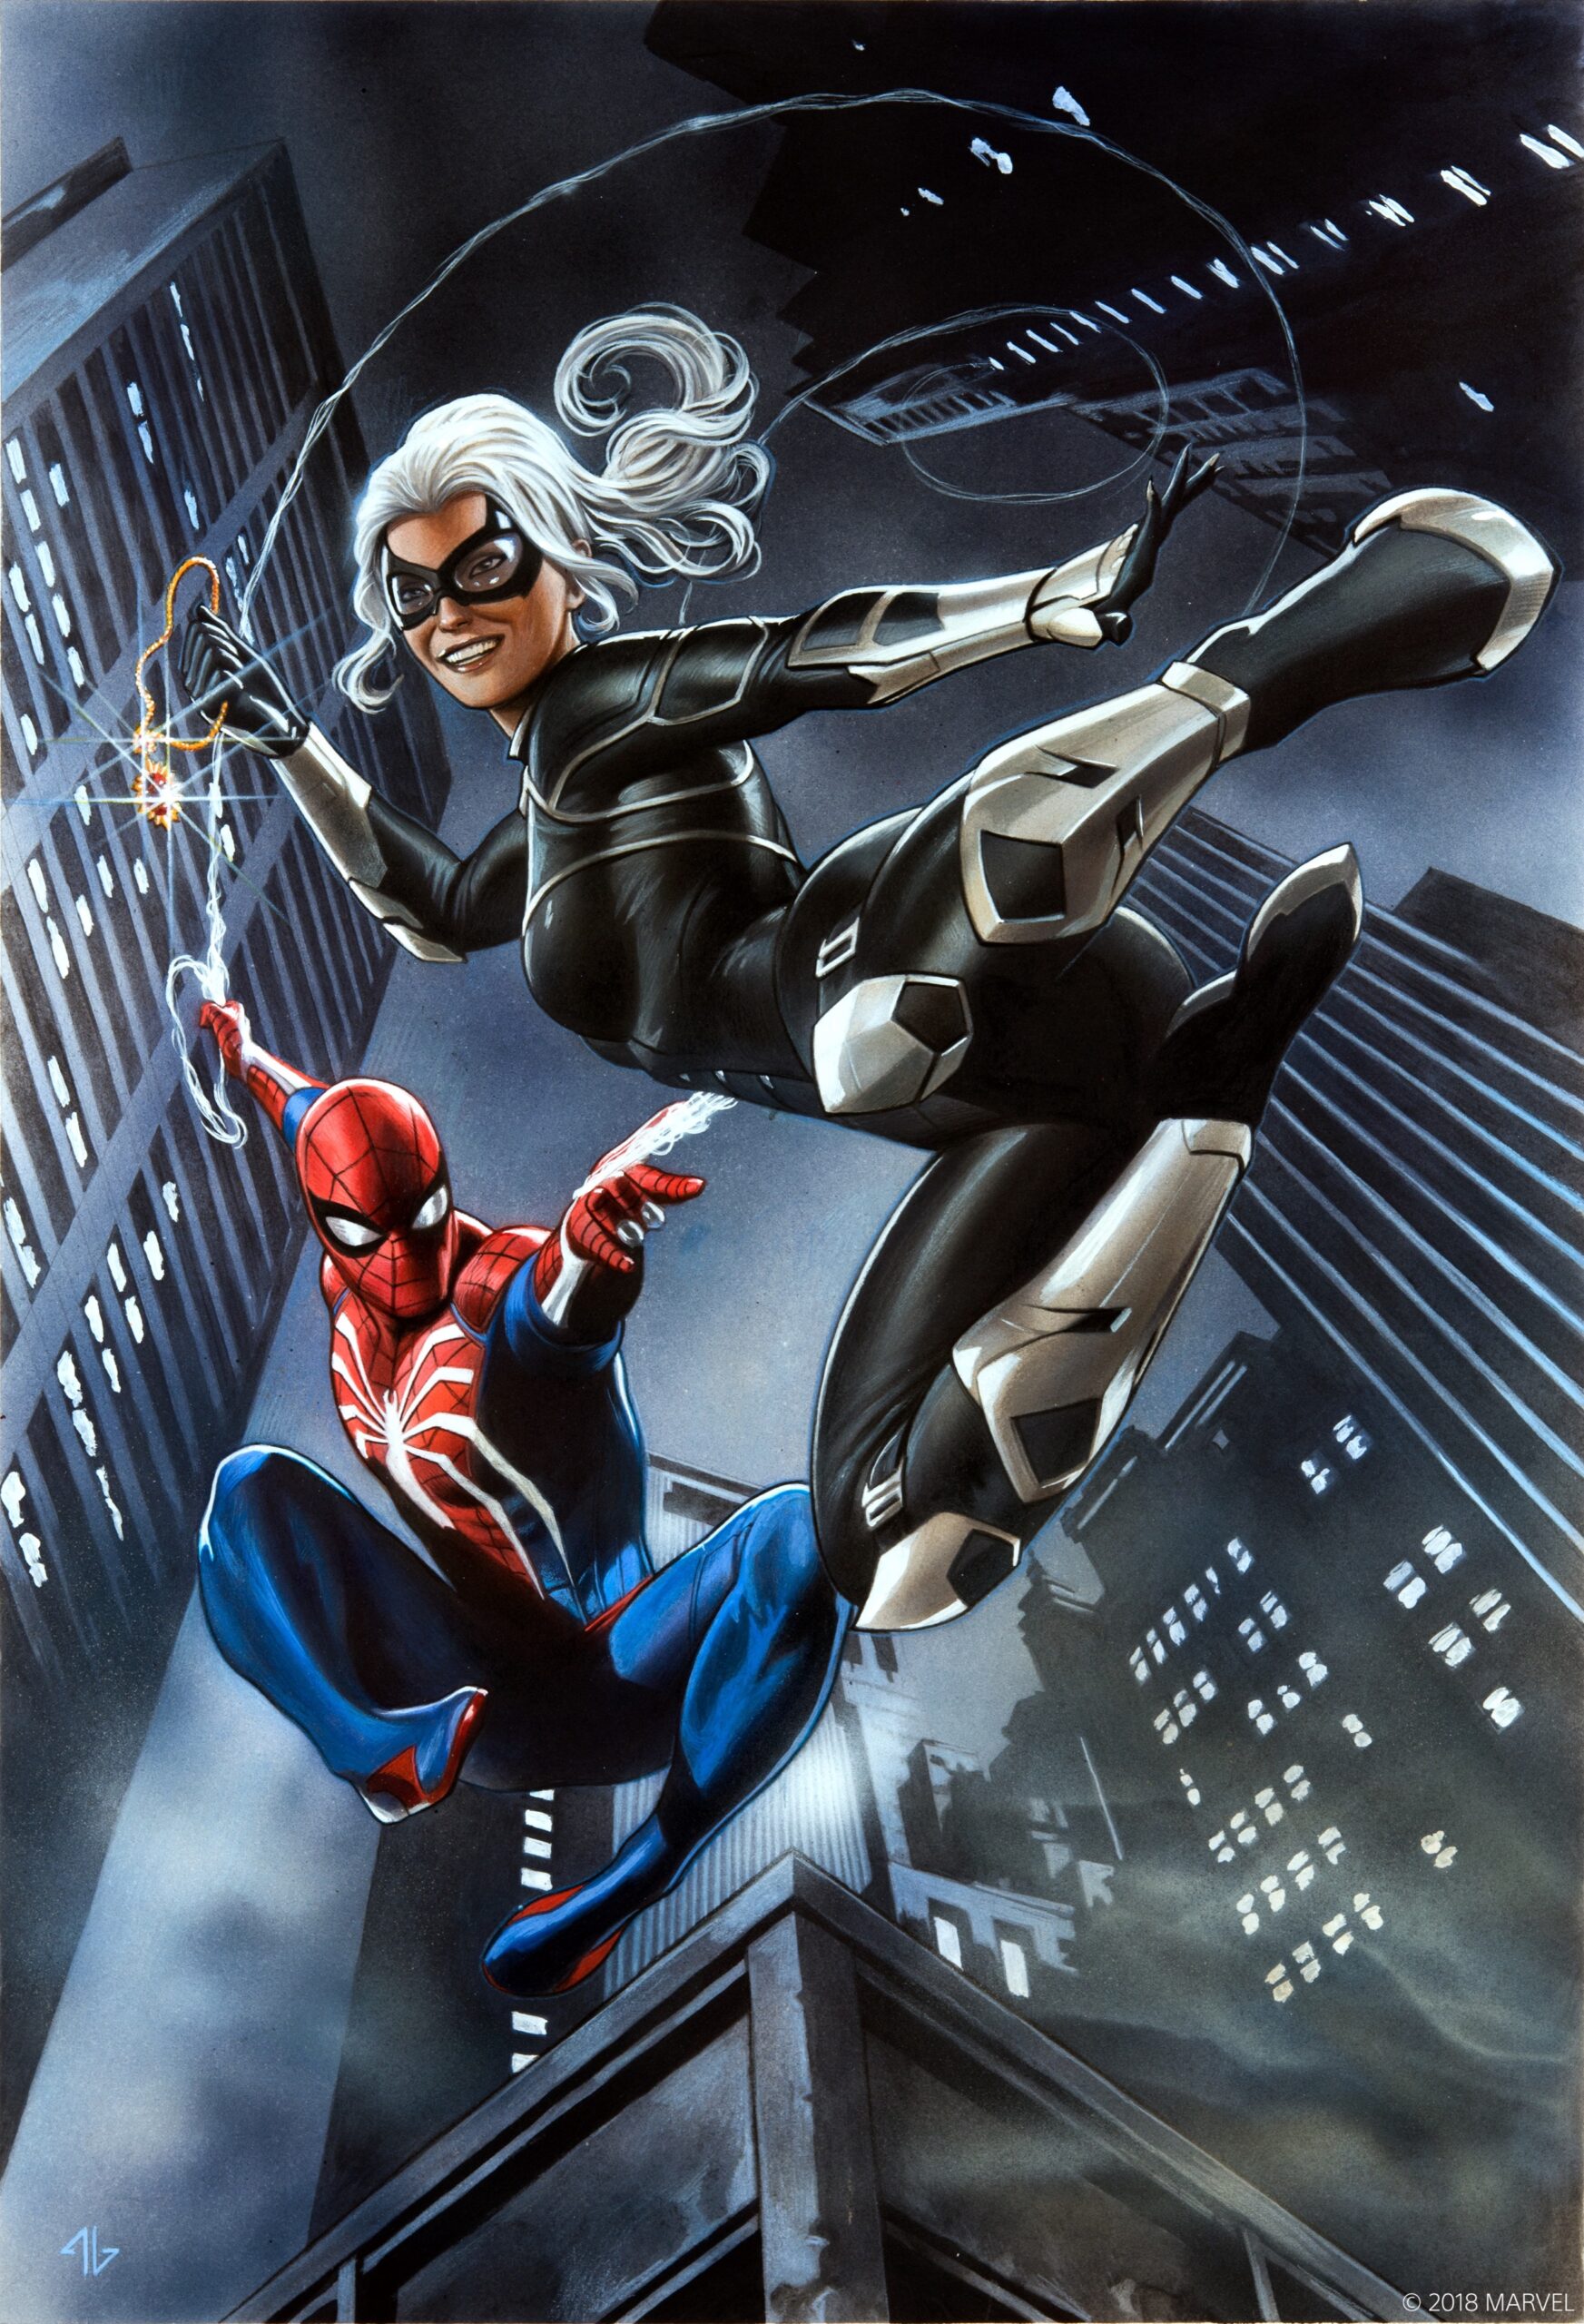 Marvel's Spider-Man: The Heist Trophy Guide